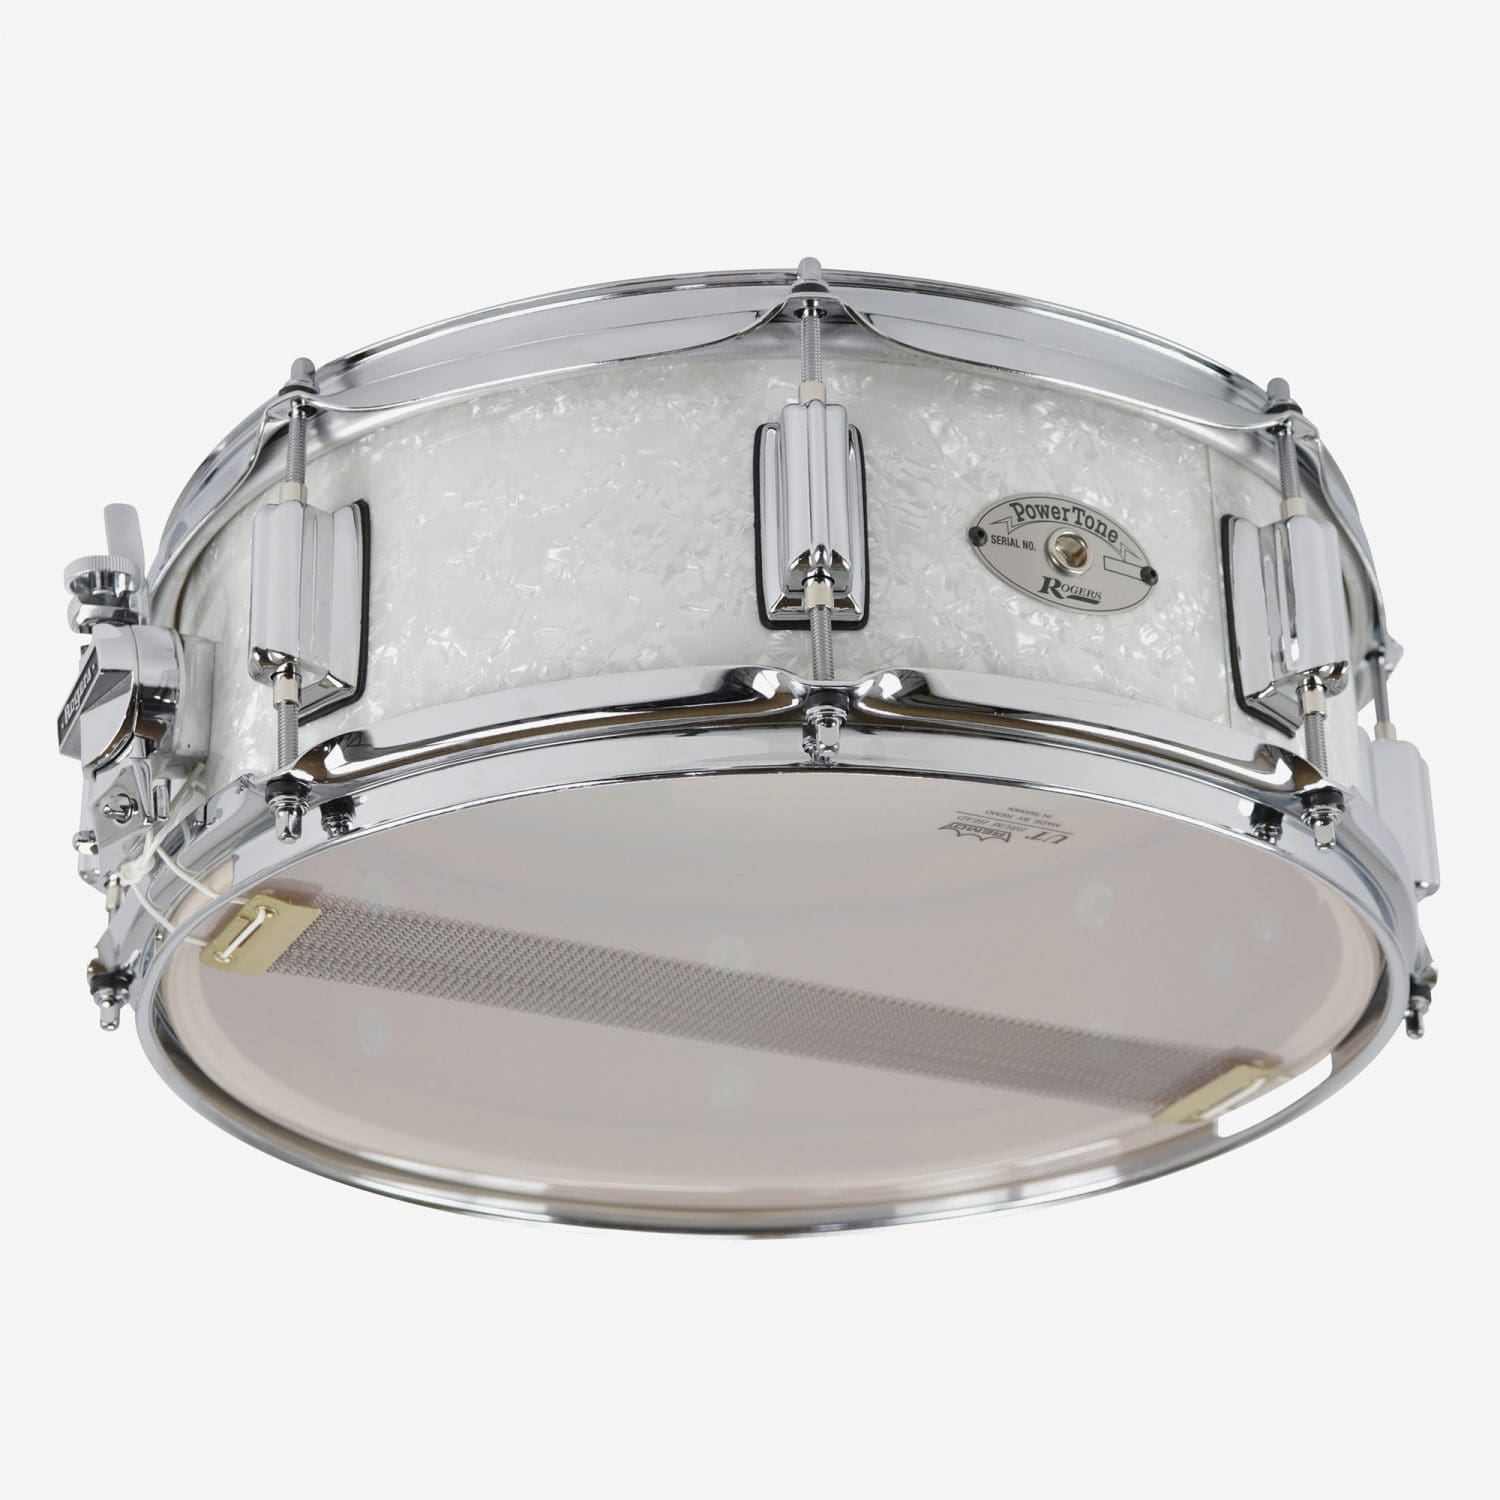 White Marine Pearl PowerTone Snare Drum